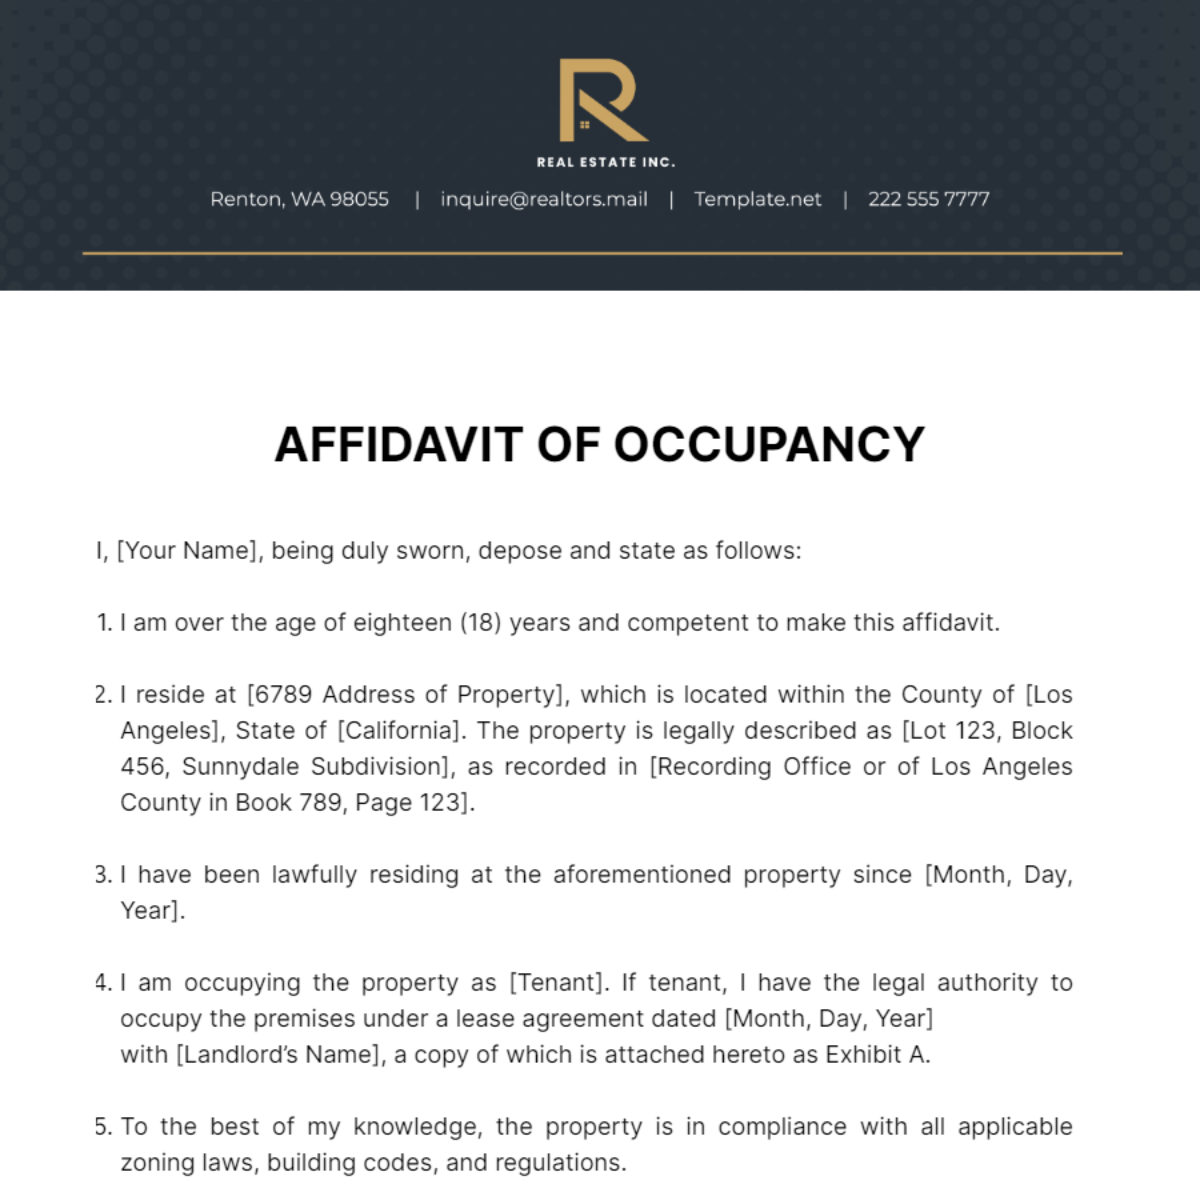 Real Estate Affidavit of Occupancy Template